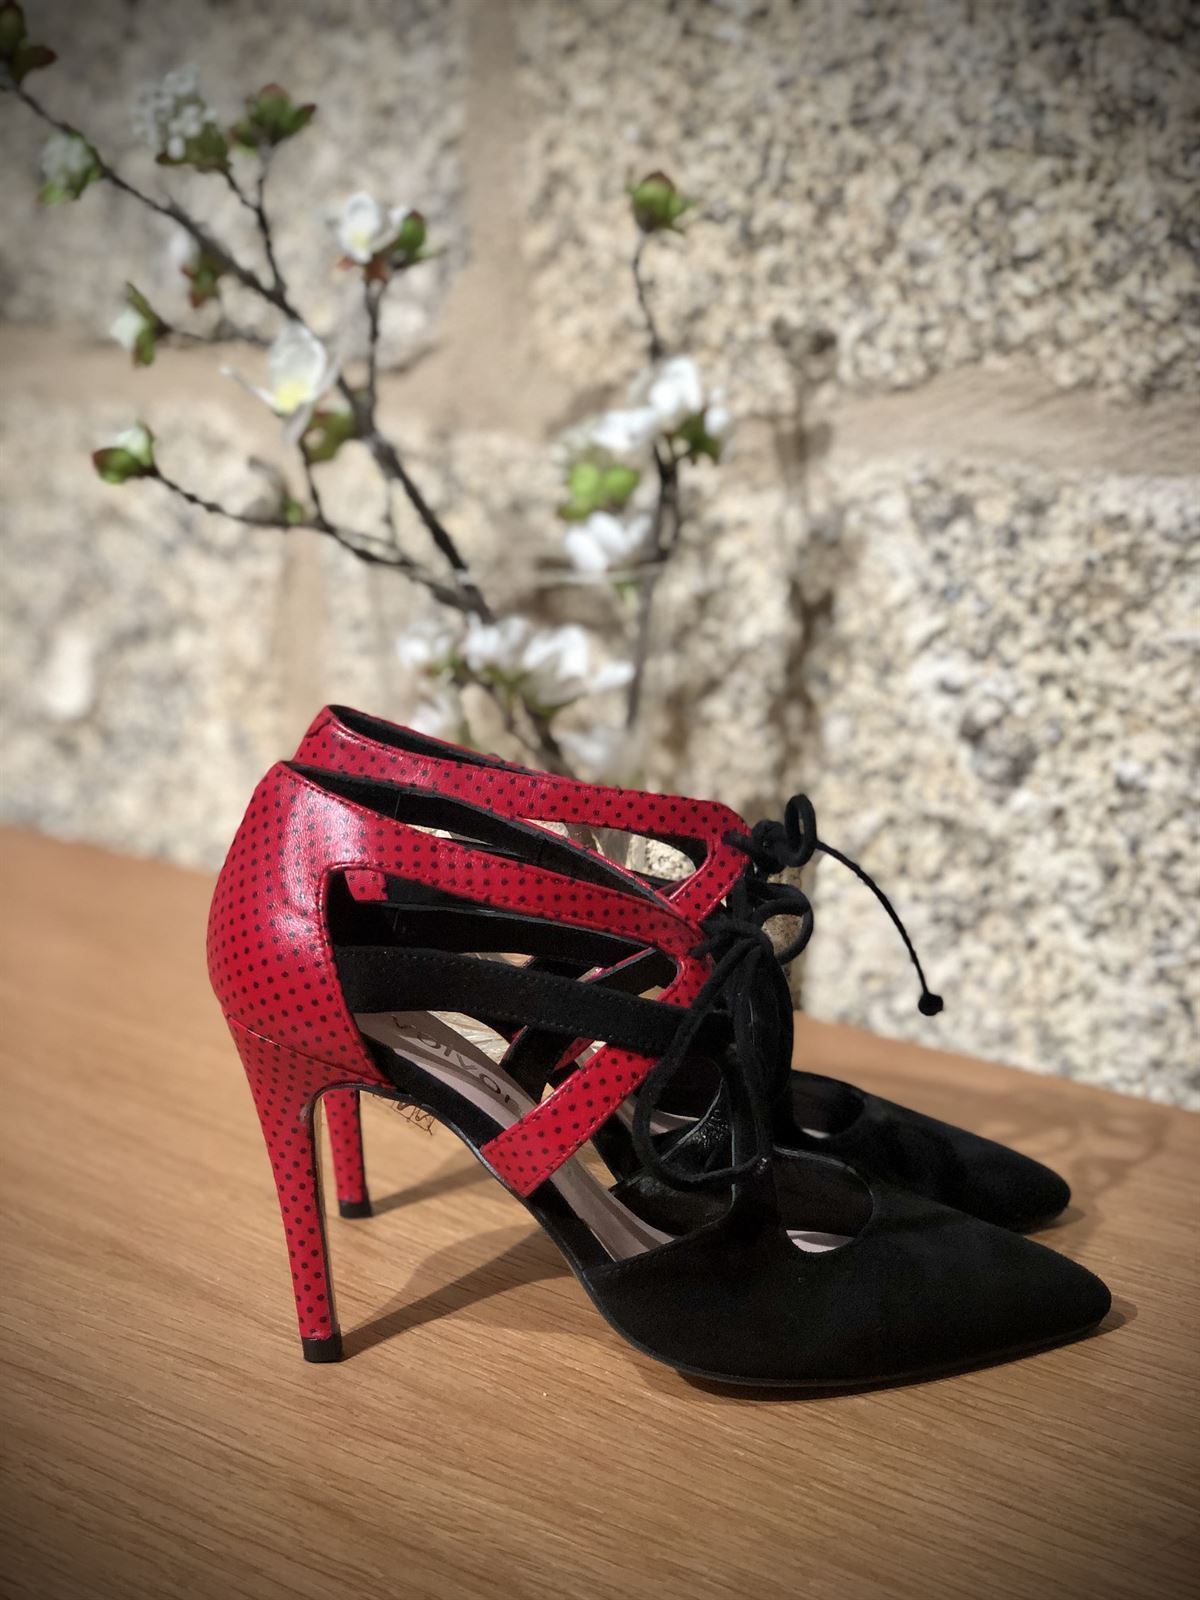 Zapato angari cordones negro rojo - Imagen 3